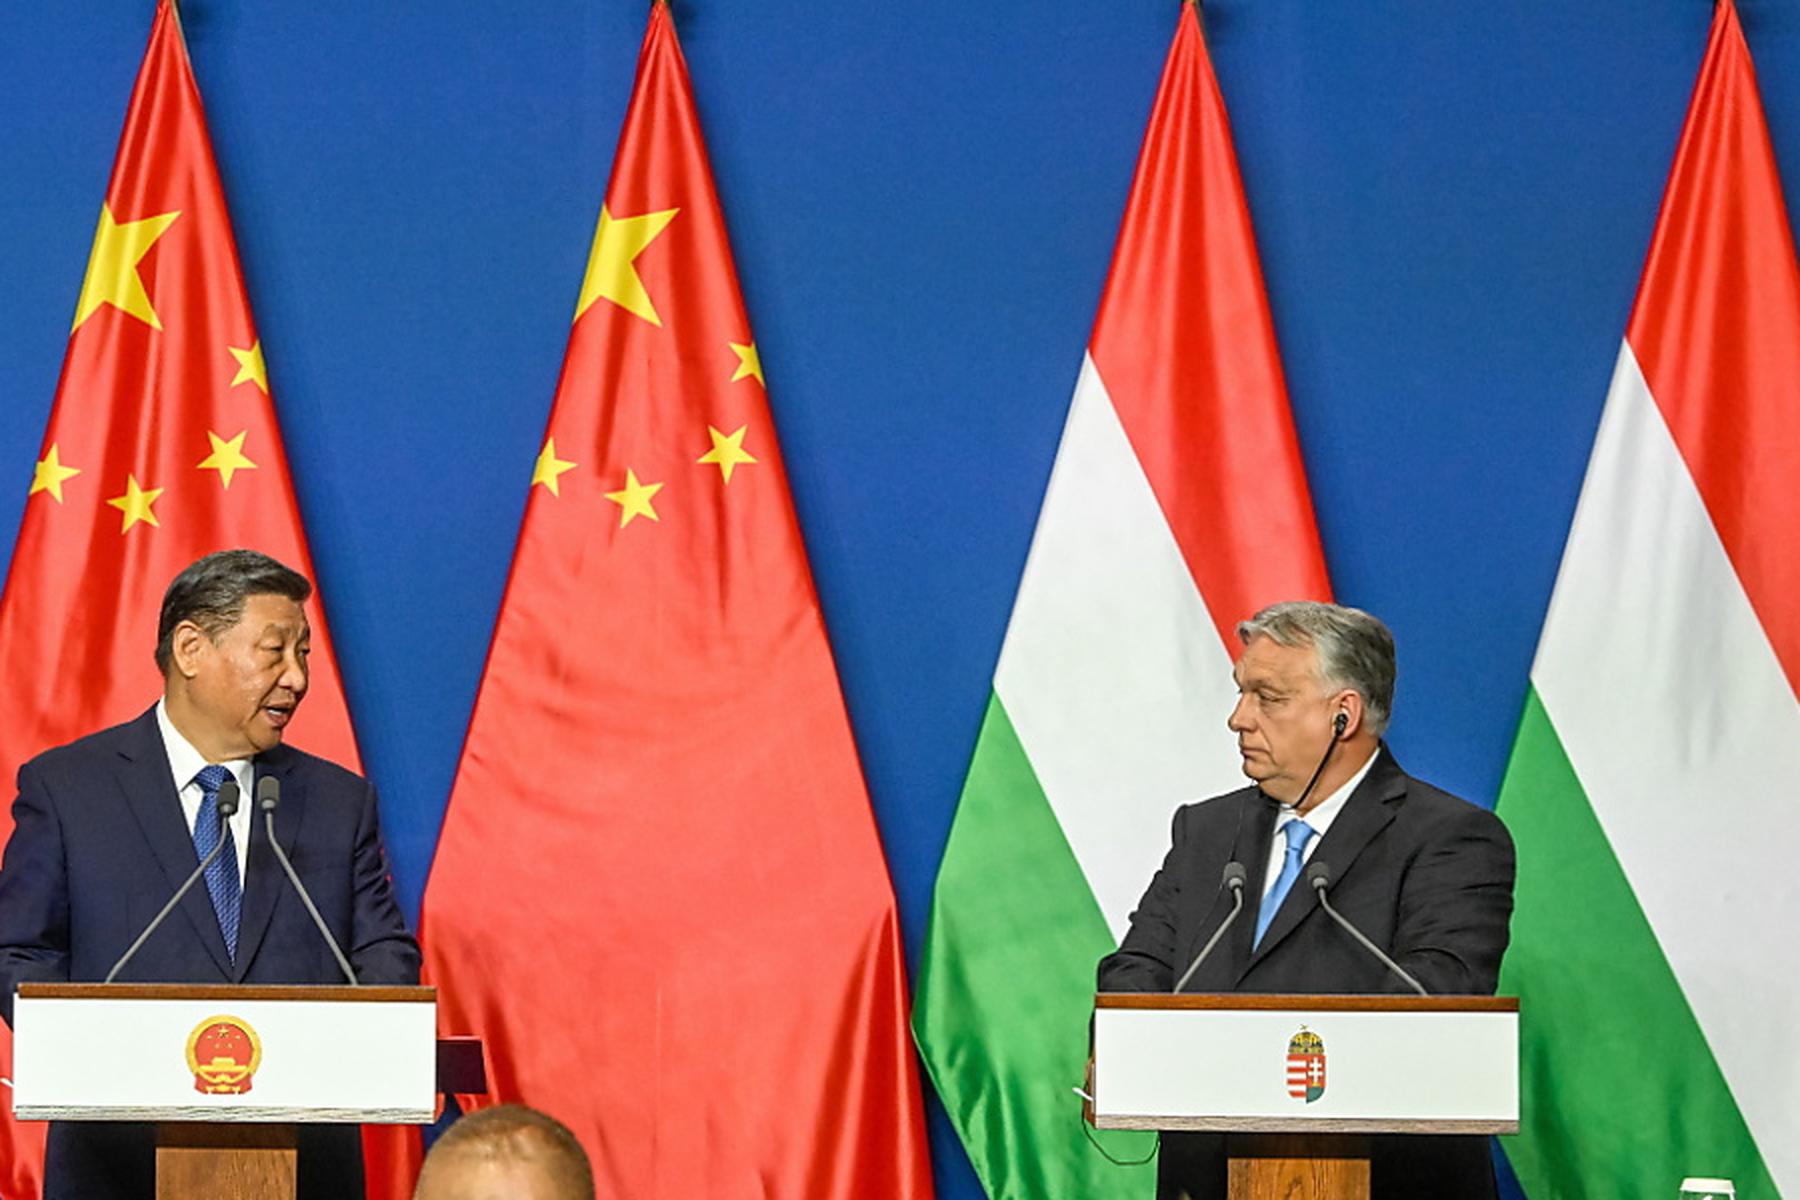 Budapest: Xi vereinbarte mit Budapest 